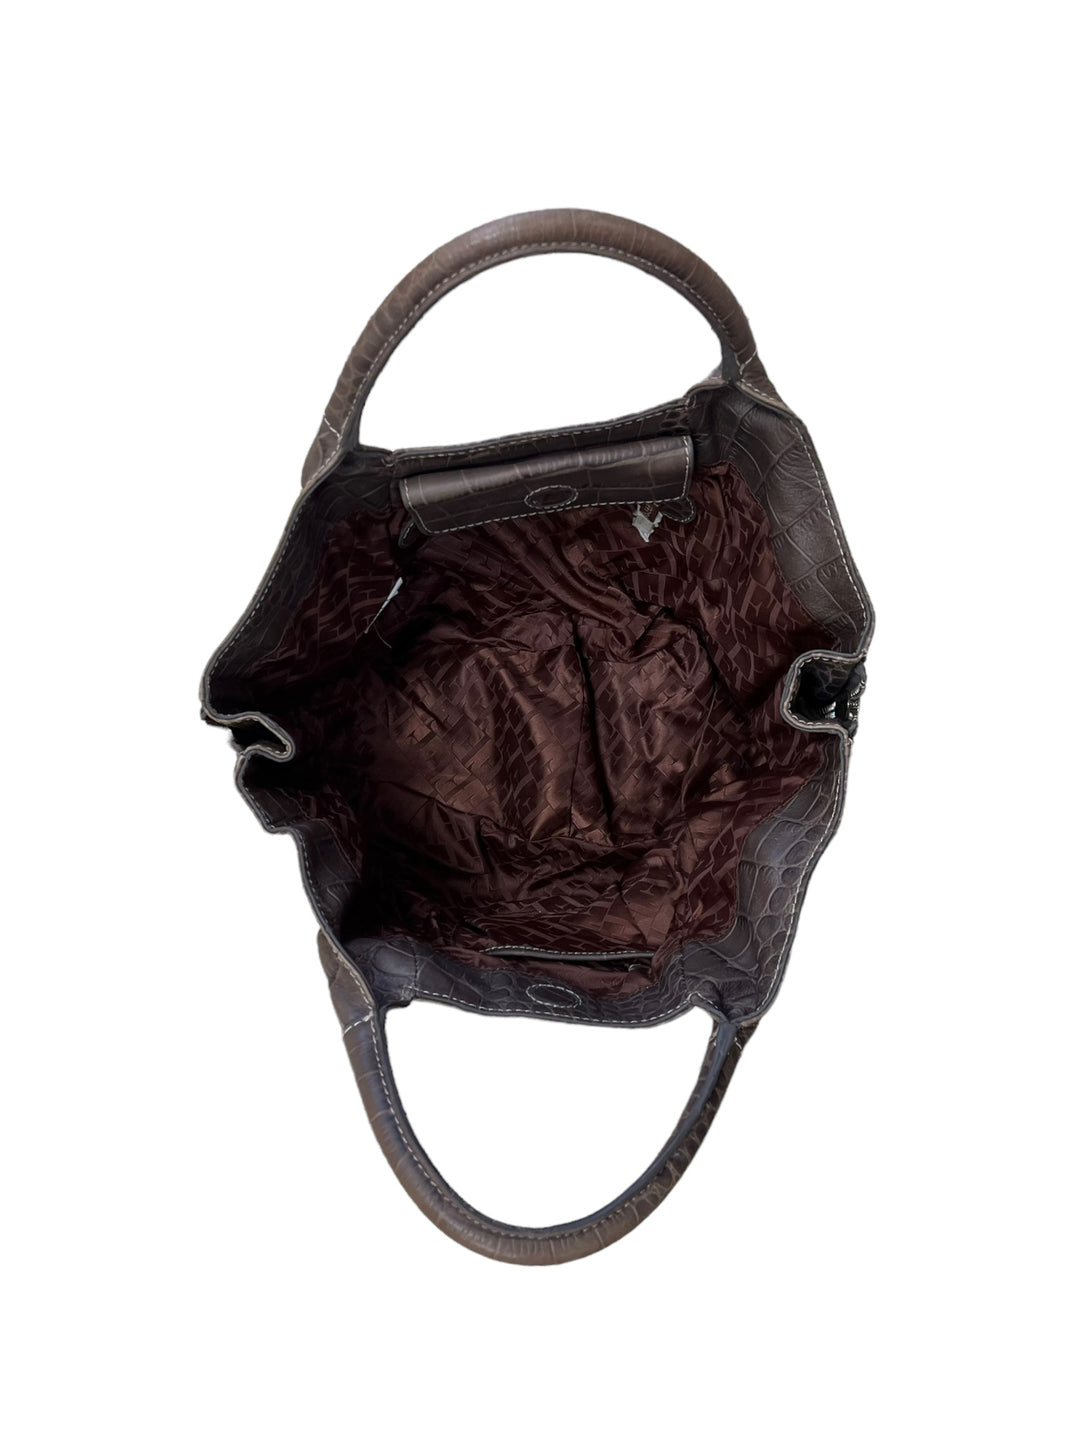 Gianfranco Ferre Vintage Leather handbag